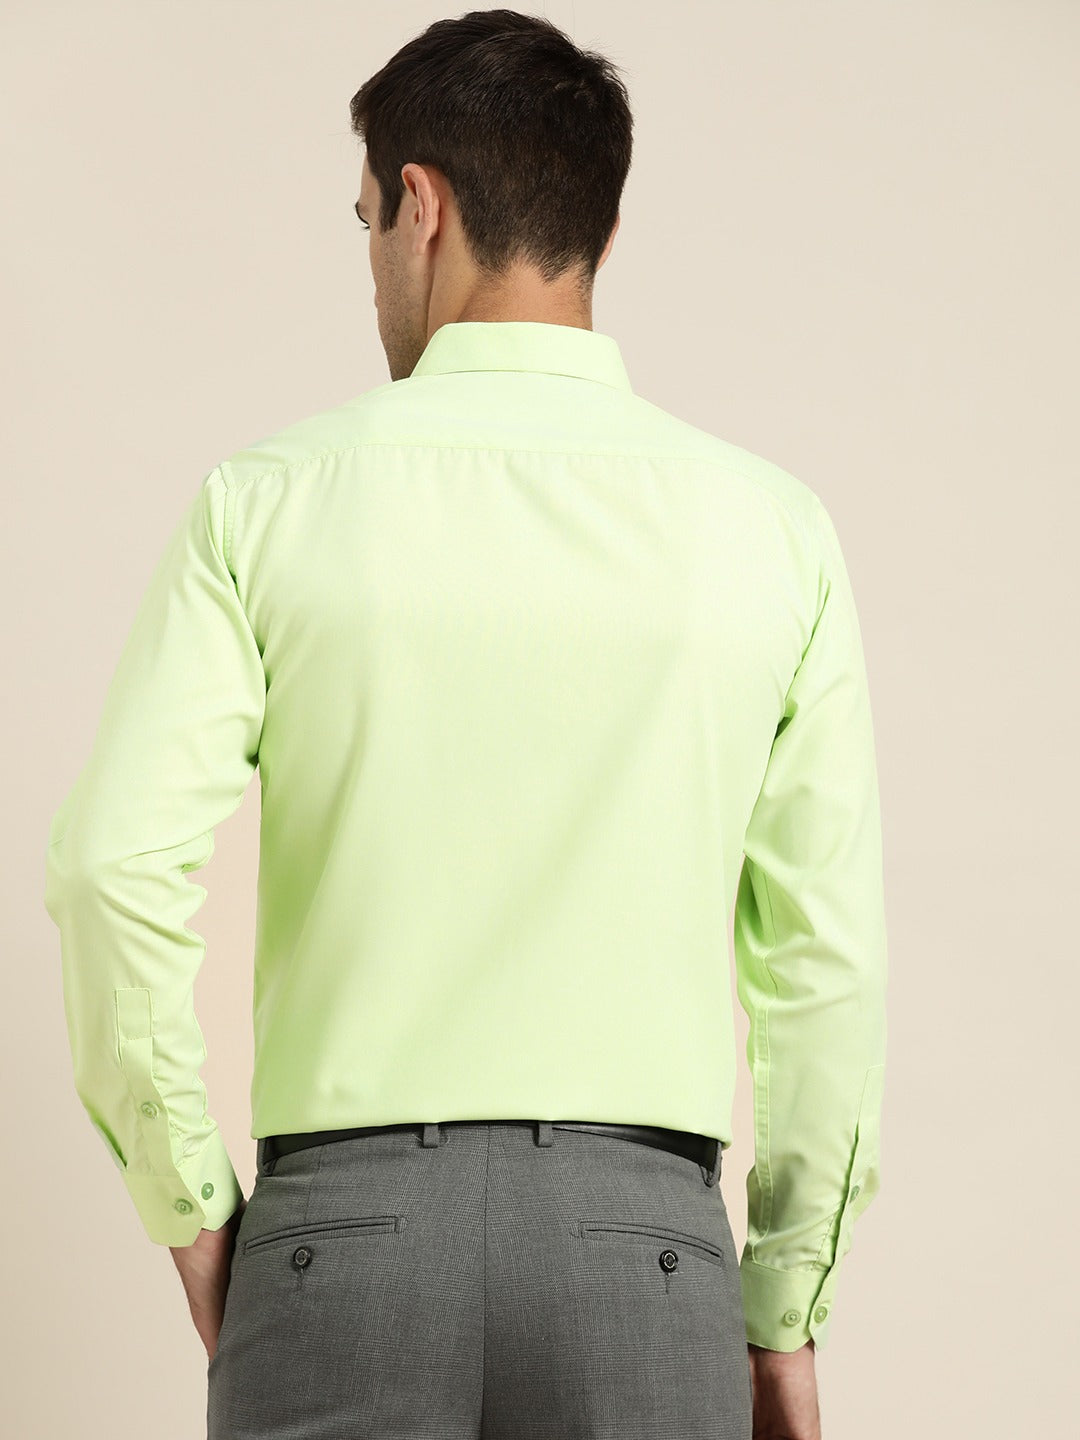 Men's Cotton Lime Green Casual Shirt